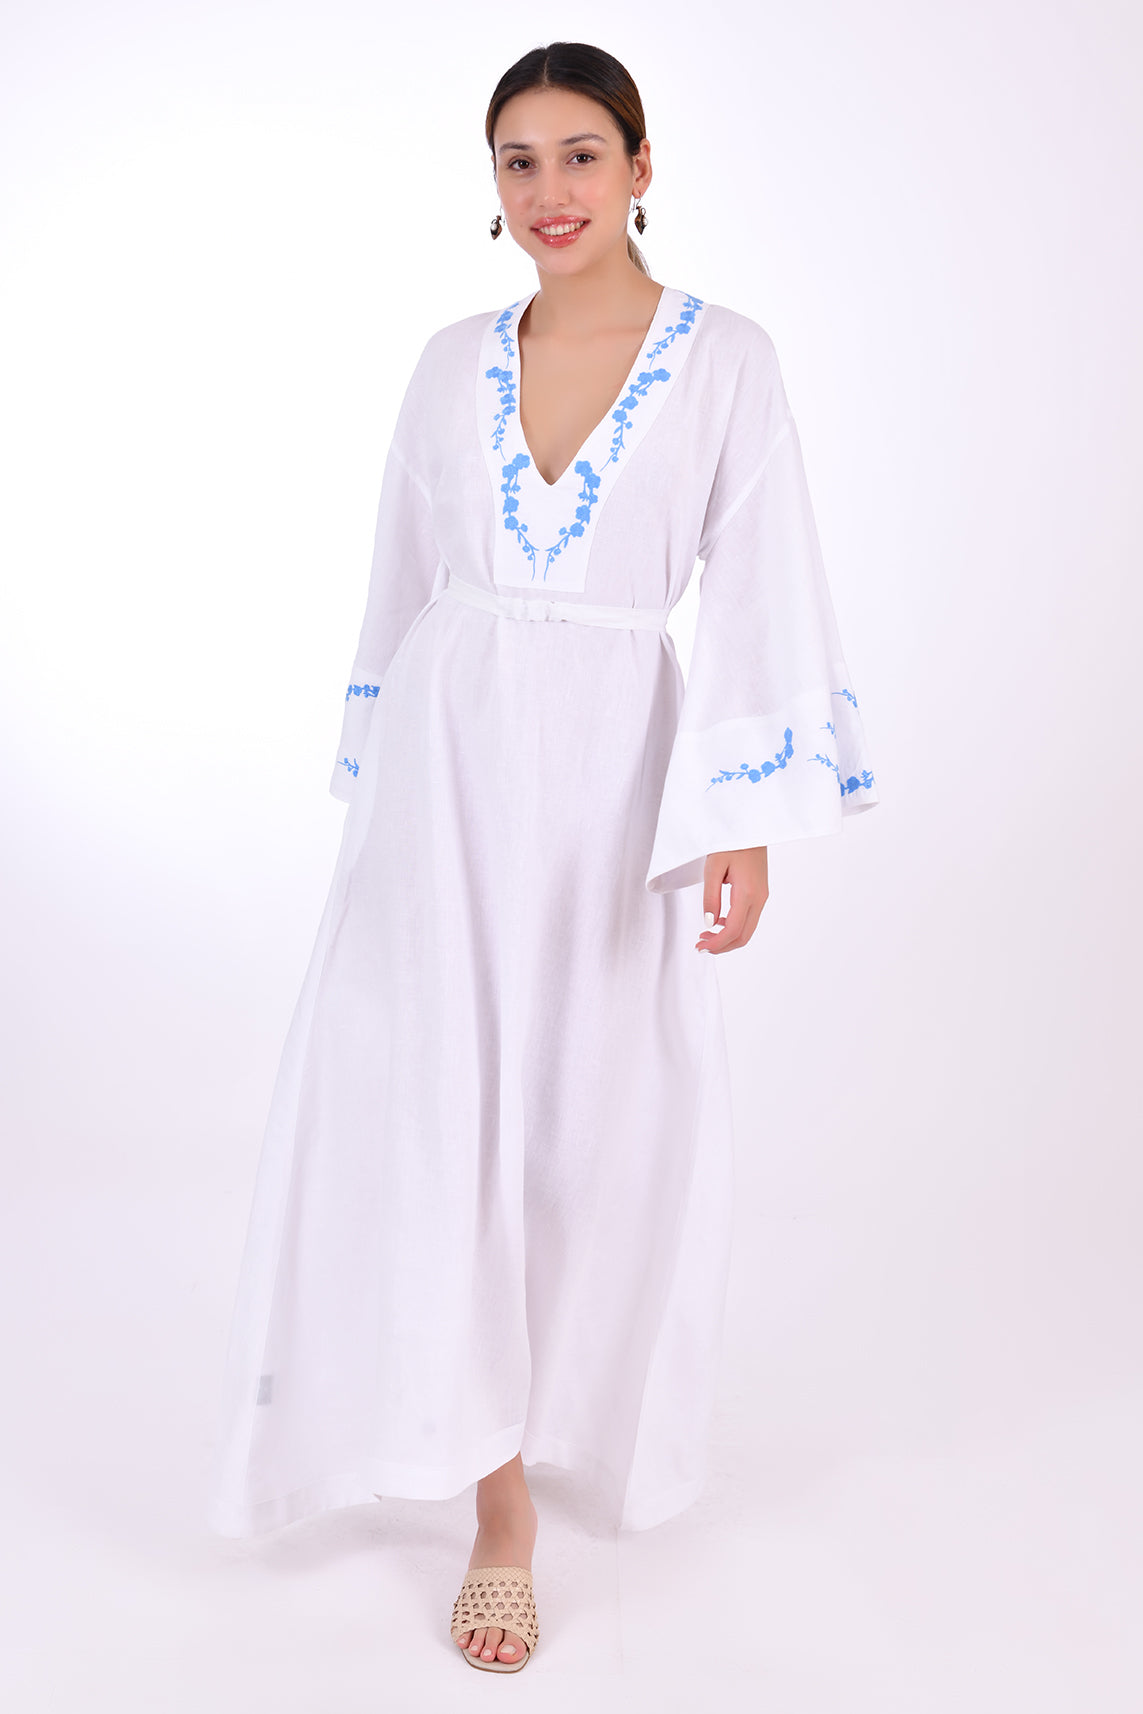 Fanm Mon Made to Measure Sou De Linen Dress